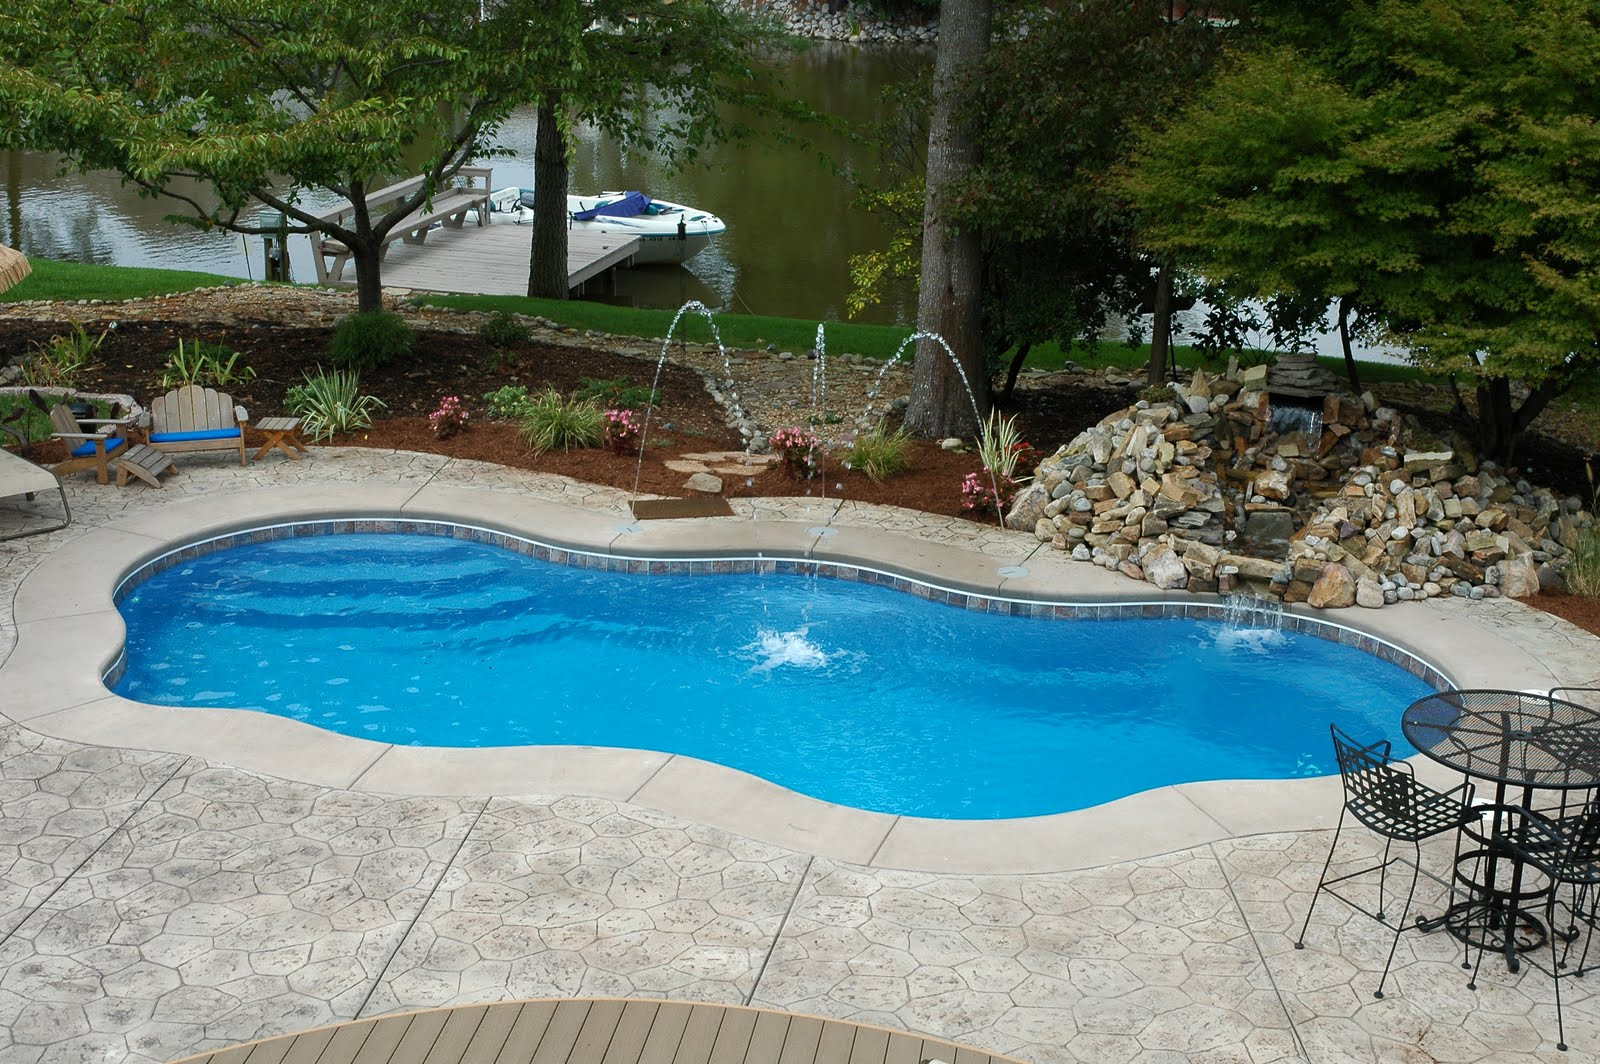 Best ideas about Inground Pool Designs
. Save or Pin Beautiful Inground Pools Wonderful Now.